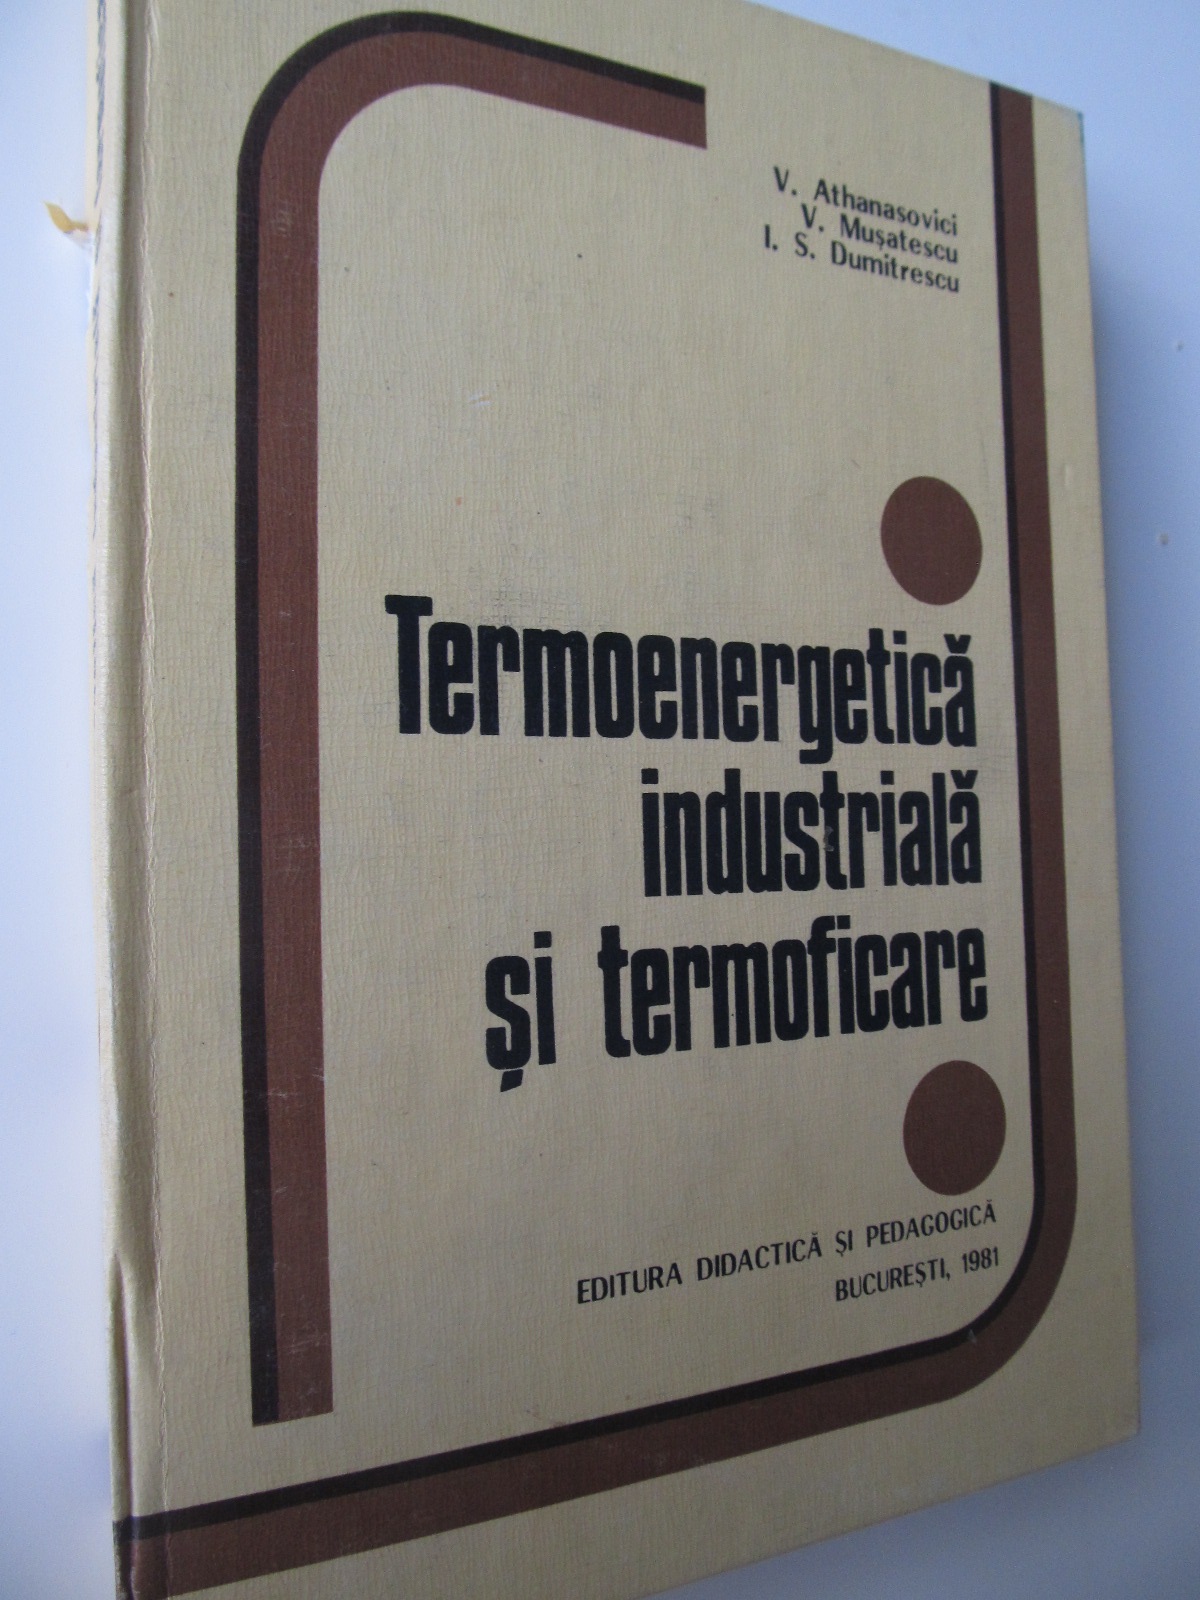 Termoenergetica industriala si termoficare - V. Athanasovici , V. Musatescu , I.S. Dumitrescu | Detalii carte